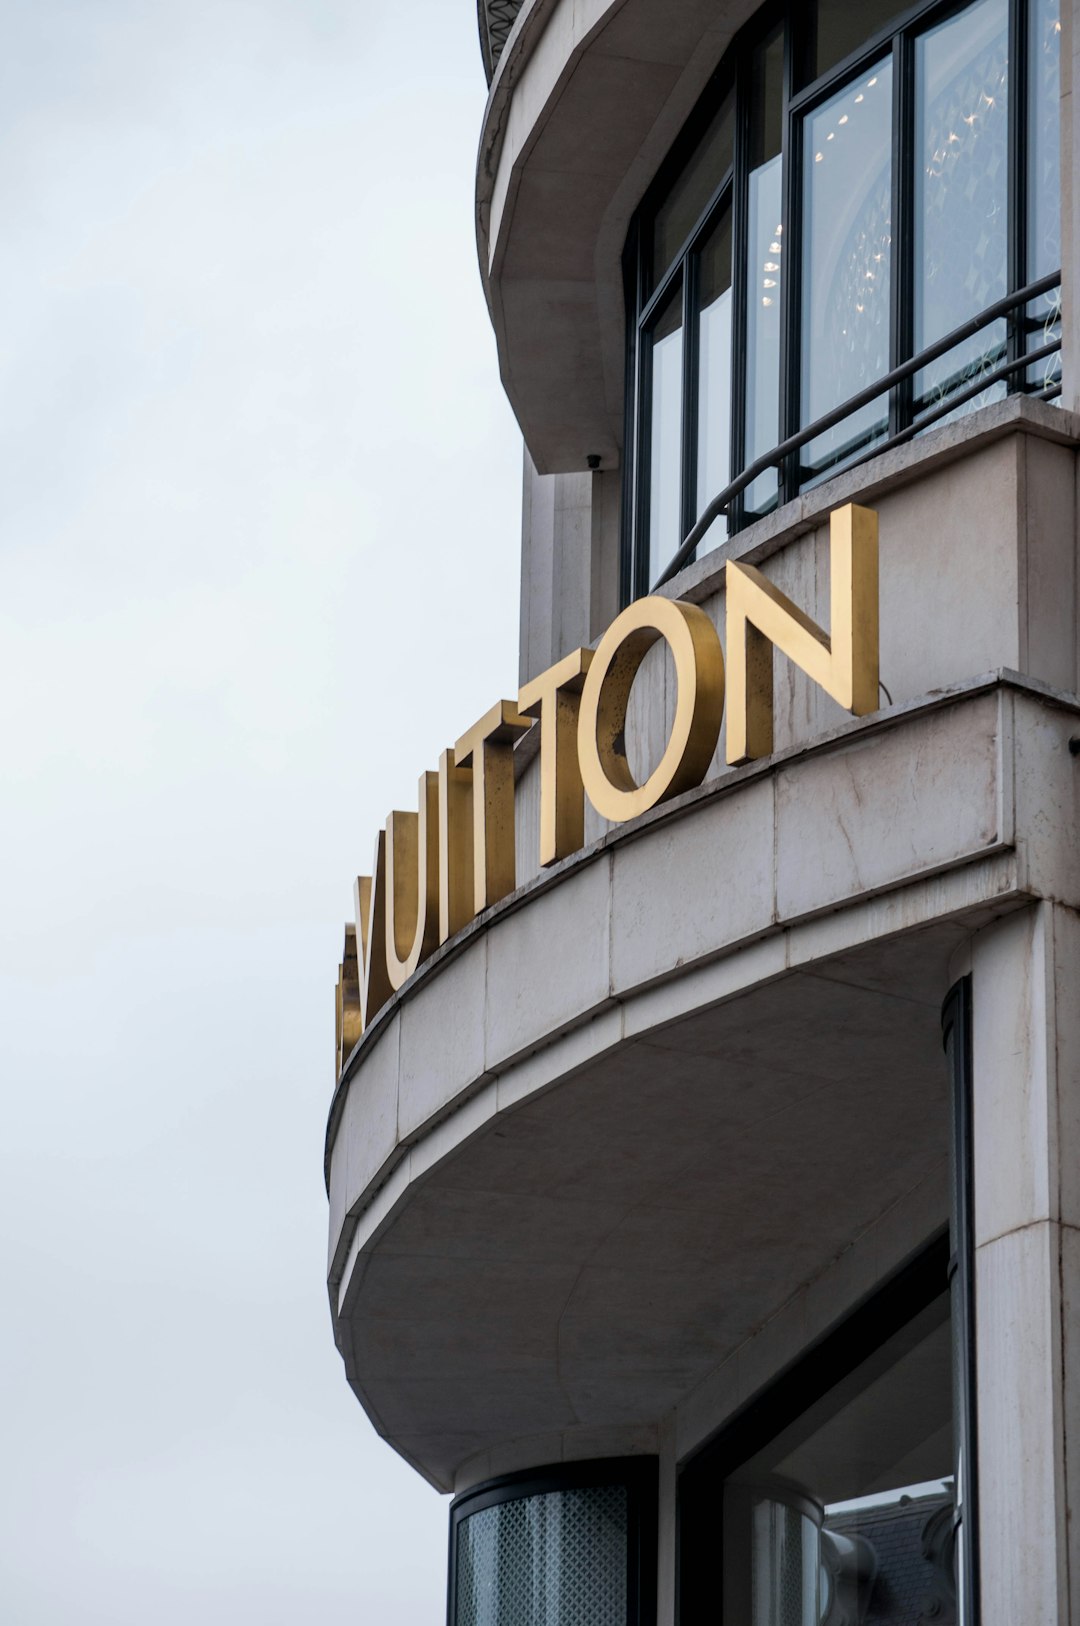 Louis Vuitton Pictures | Download Free Images on Unsplash